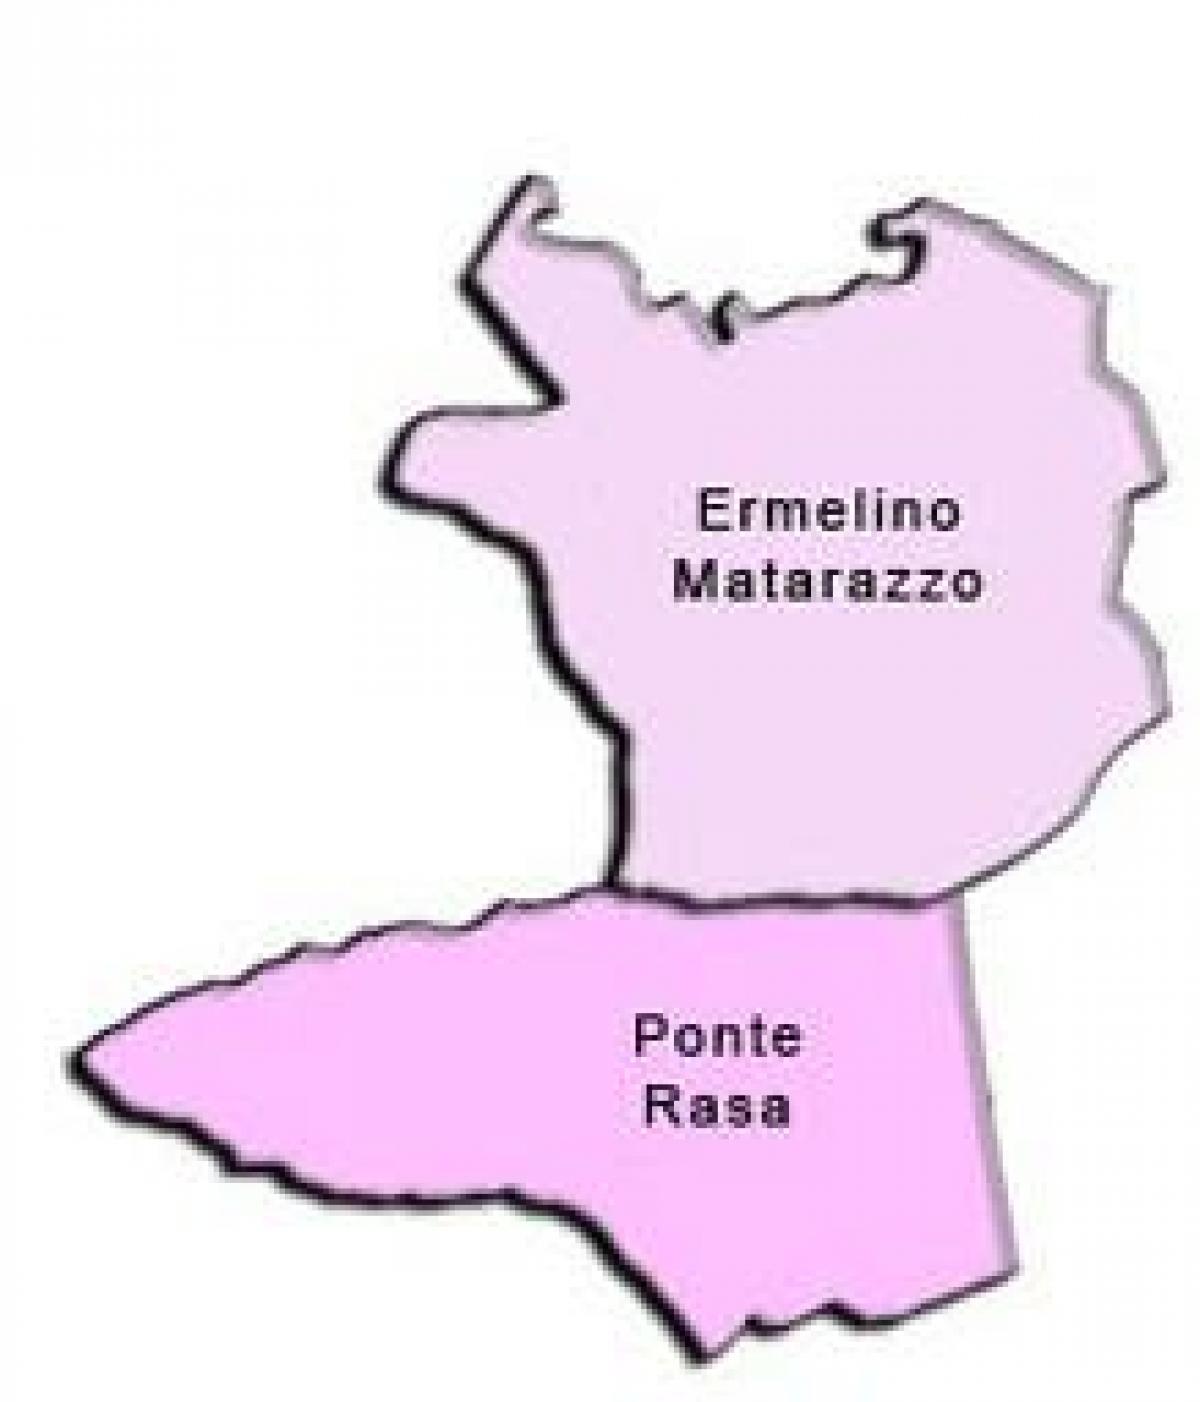 Zemljevid Ermelino Matarazzo sub-prefekturi